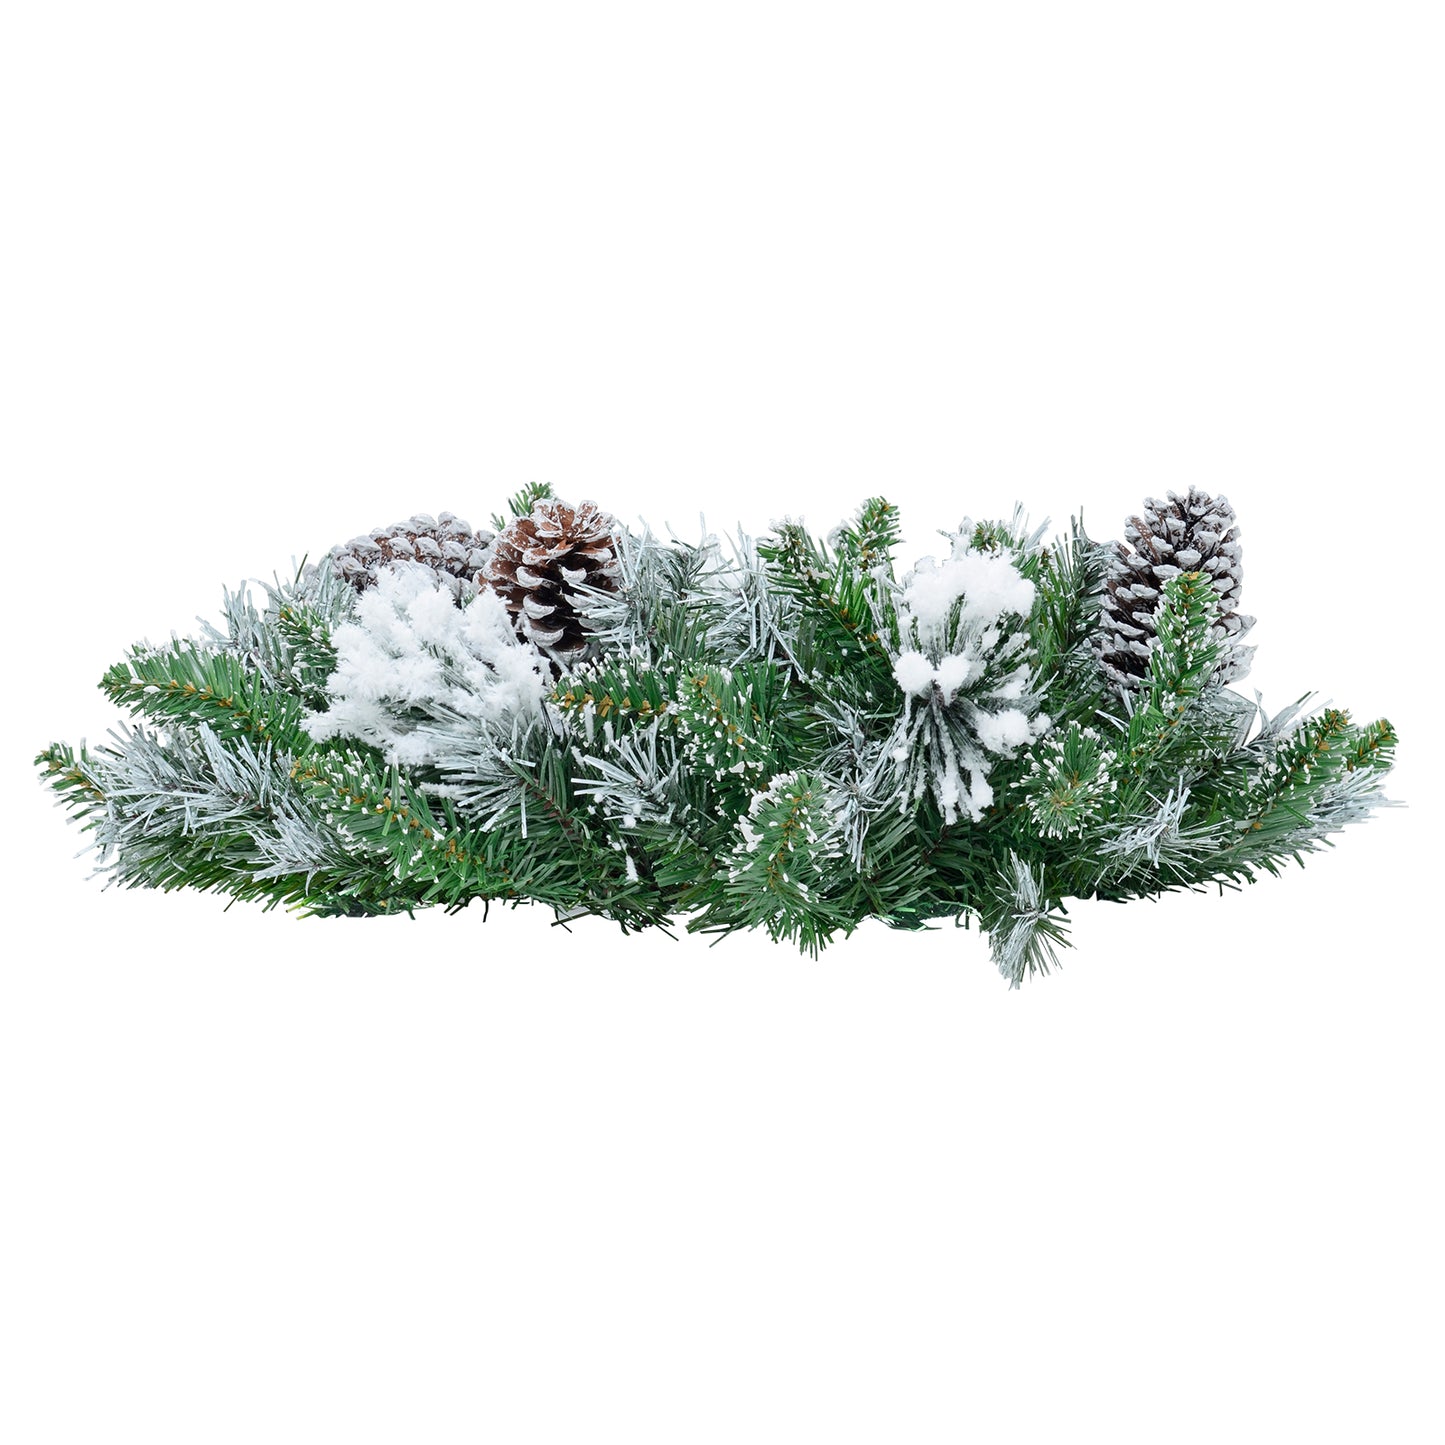 Mr Crimbo Christmas Wreath Flocked Green Pine Cones 20" - MrCrimbo.co.uk -XS6417 - -20" wreath